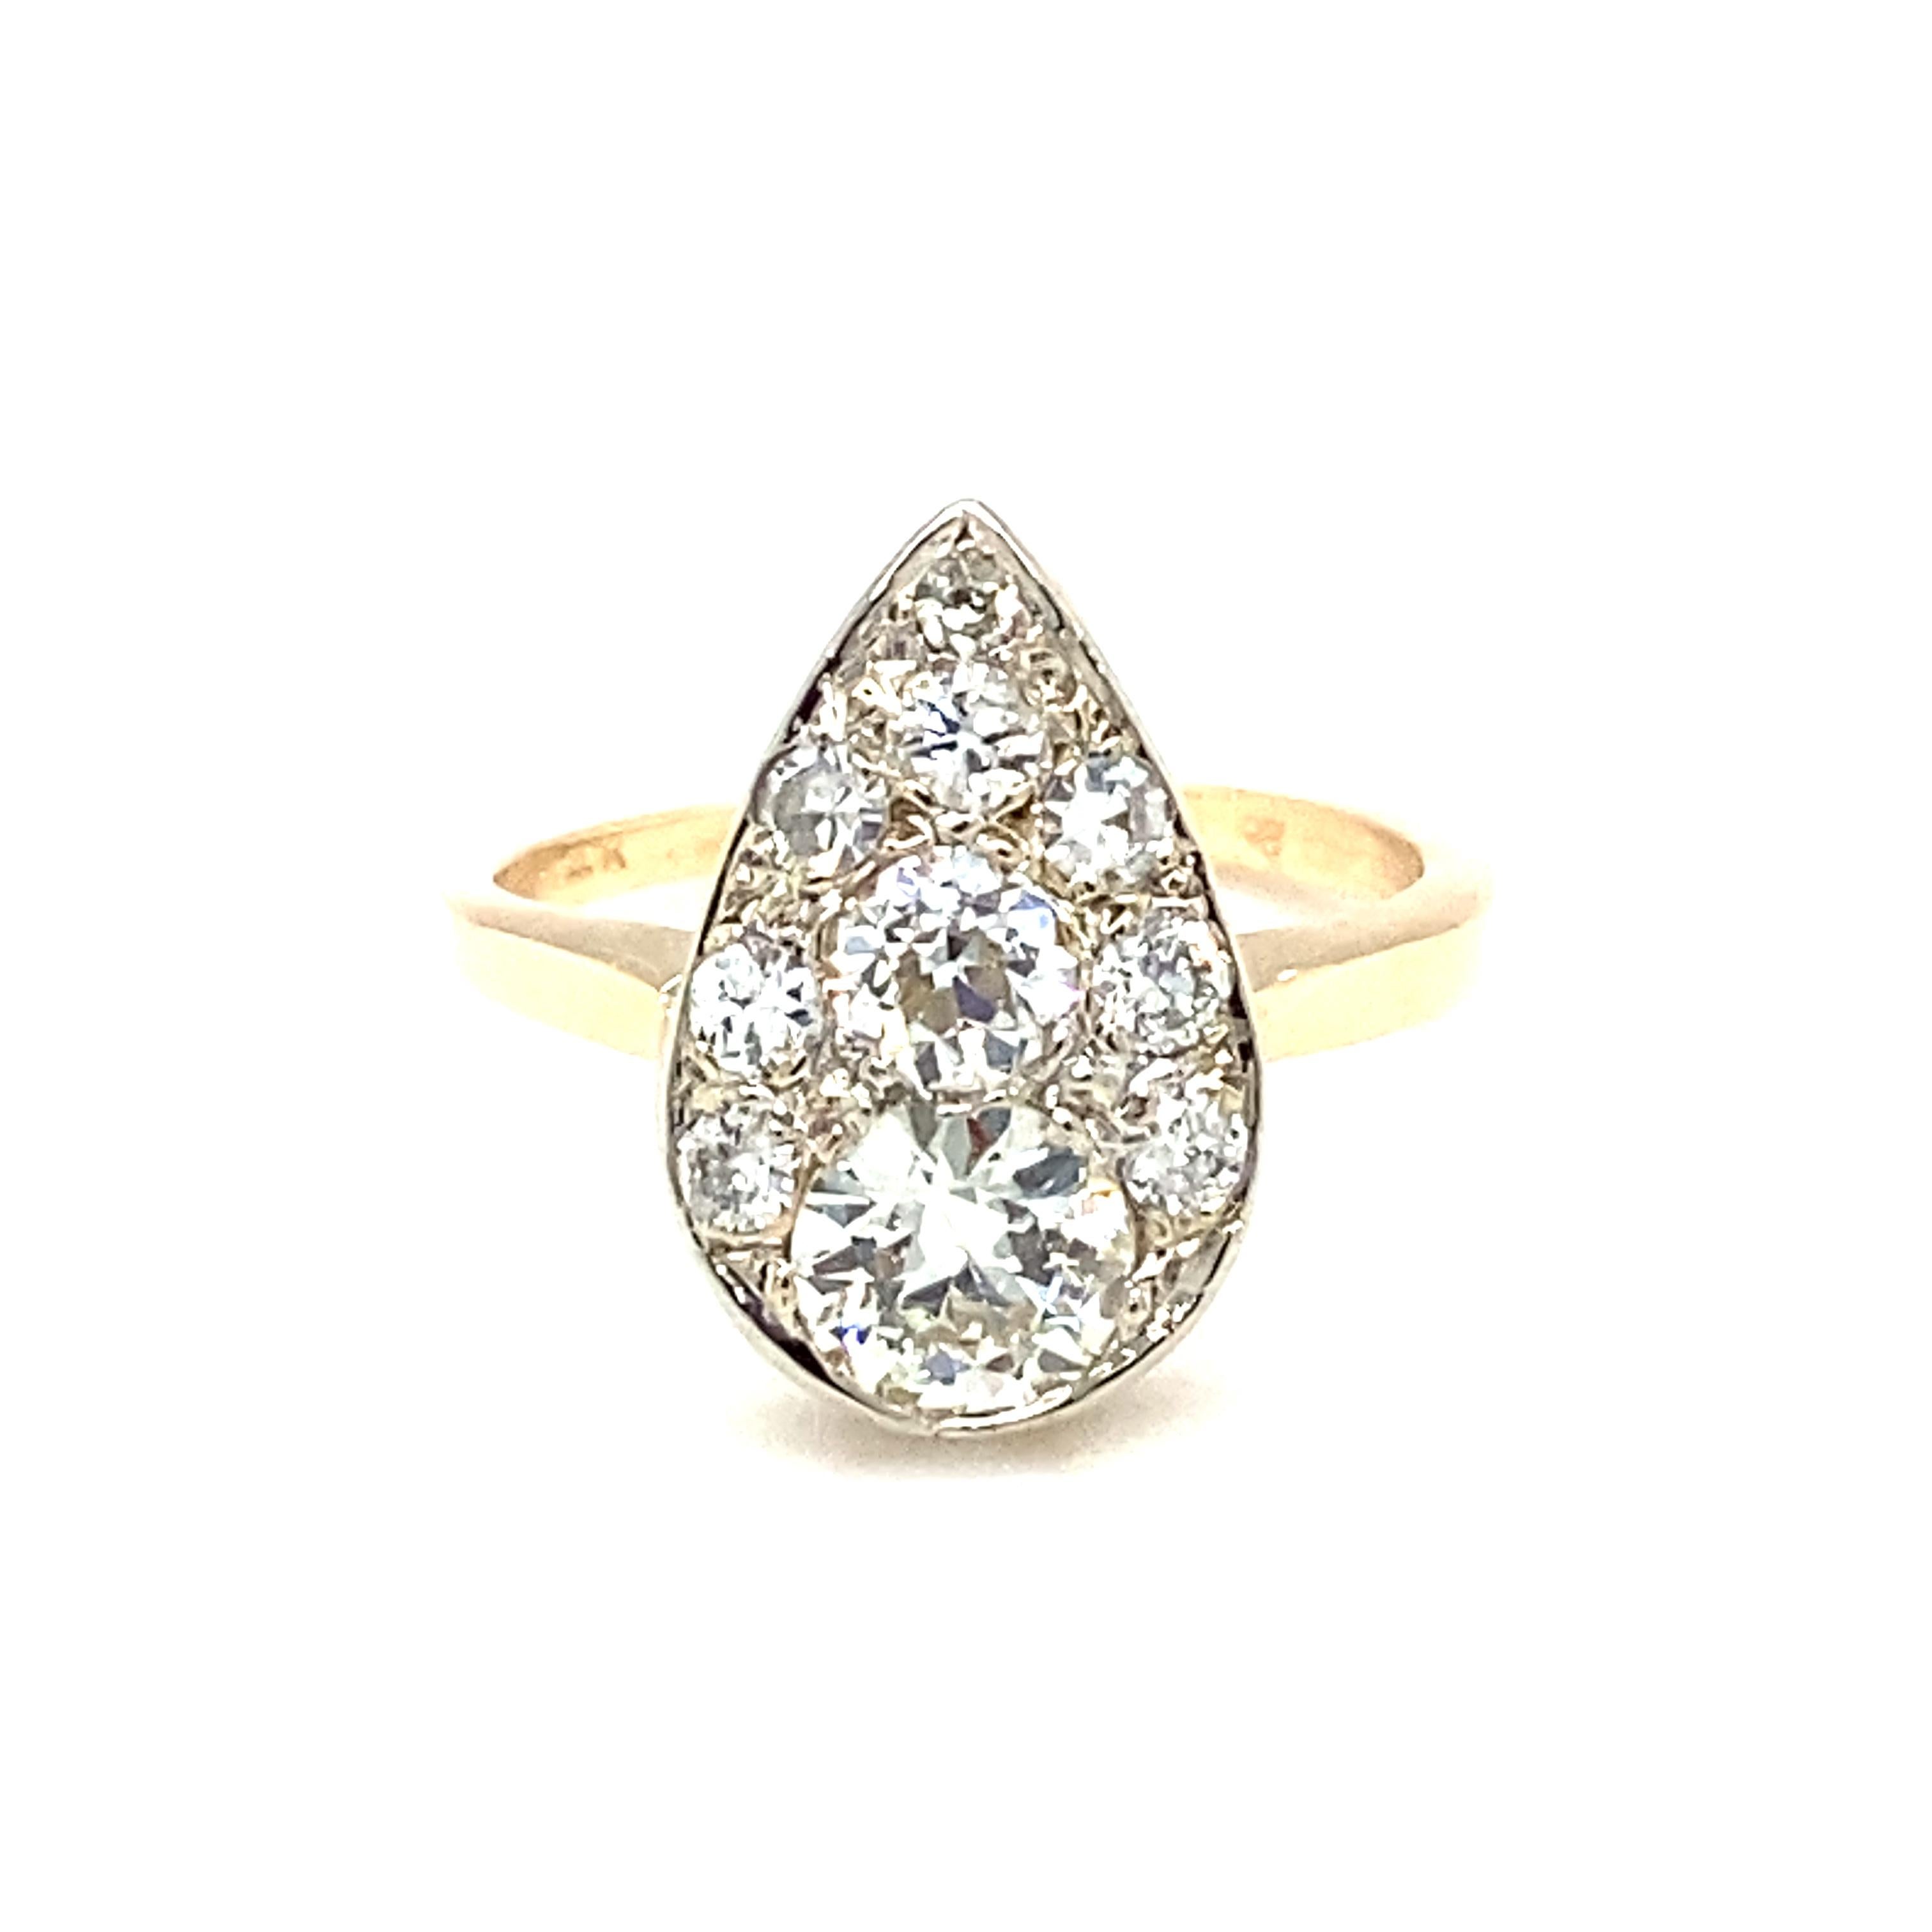 Circa 1920s Art Deco 1.30 Carat Total Diamond Ring in 14 Karat Gold In Excellent Condition For Sale In Atlanta, GA